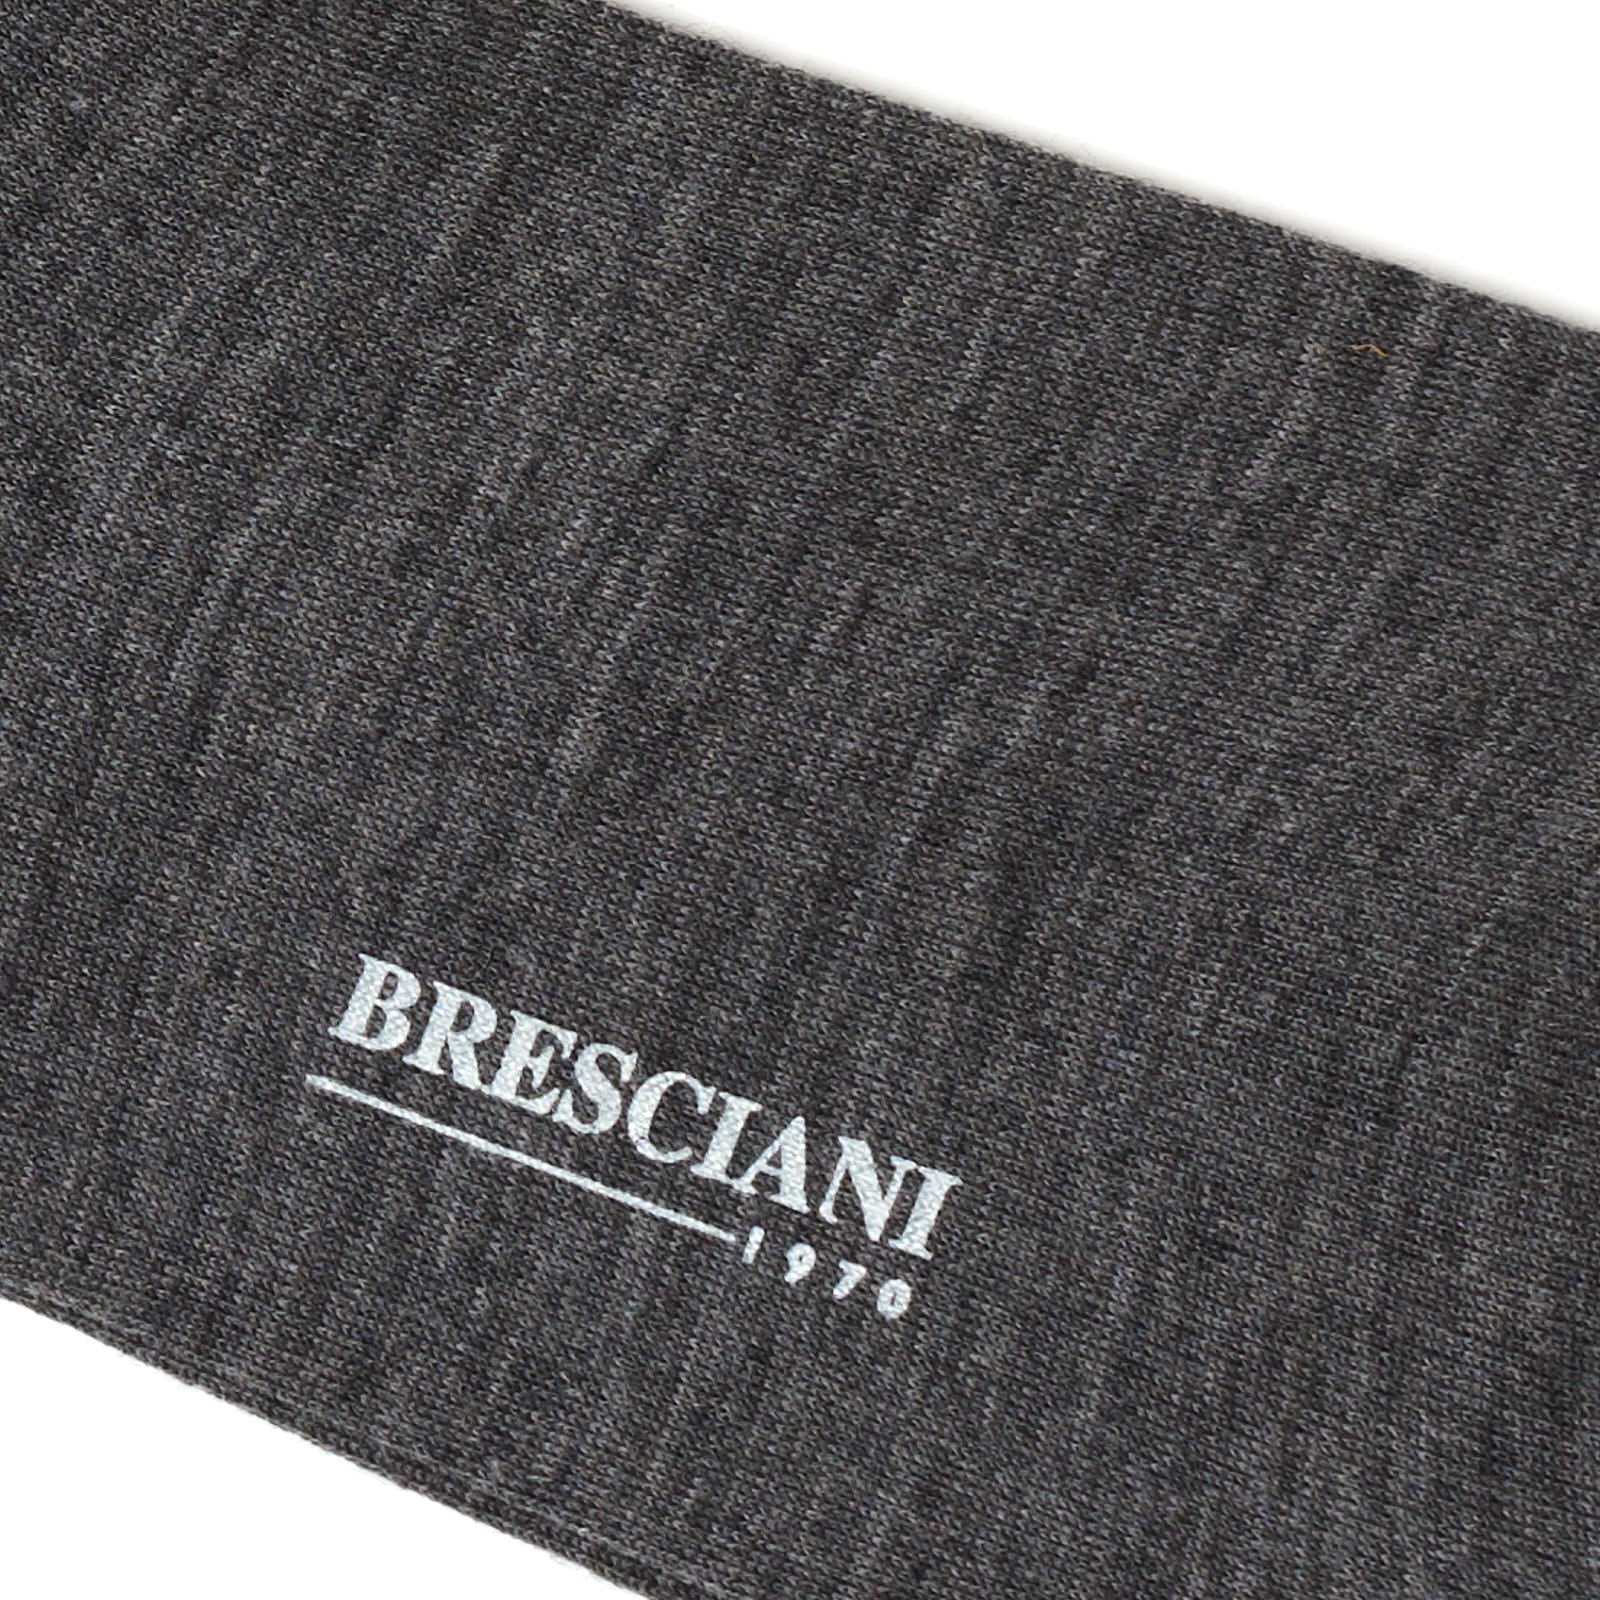 BRESCIANI Wool Blend Mid Calf Length Socks US M-L BRESCIANI